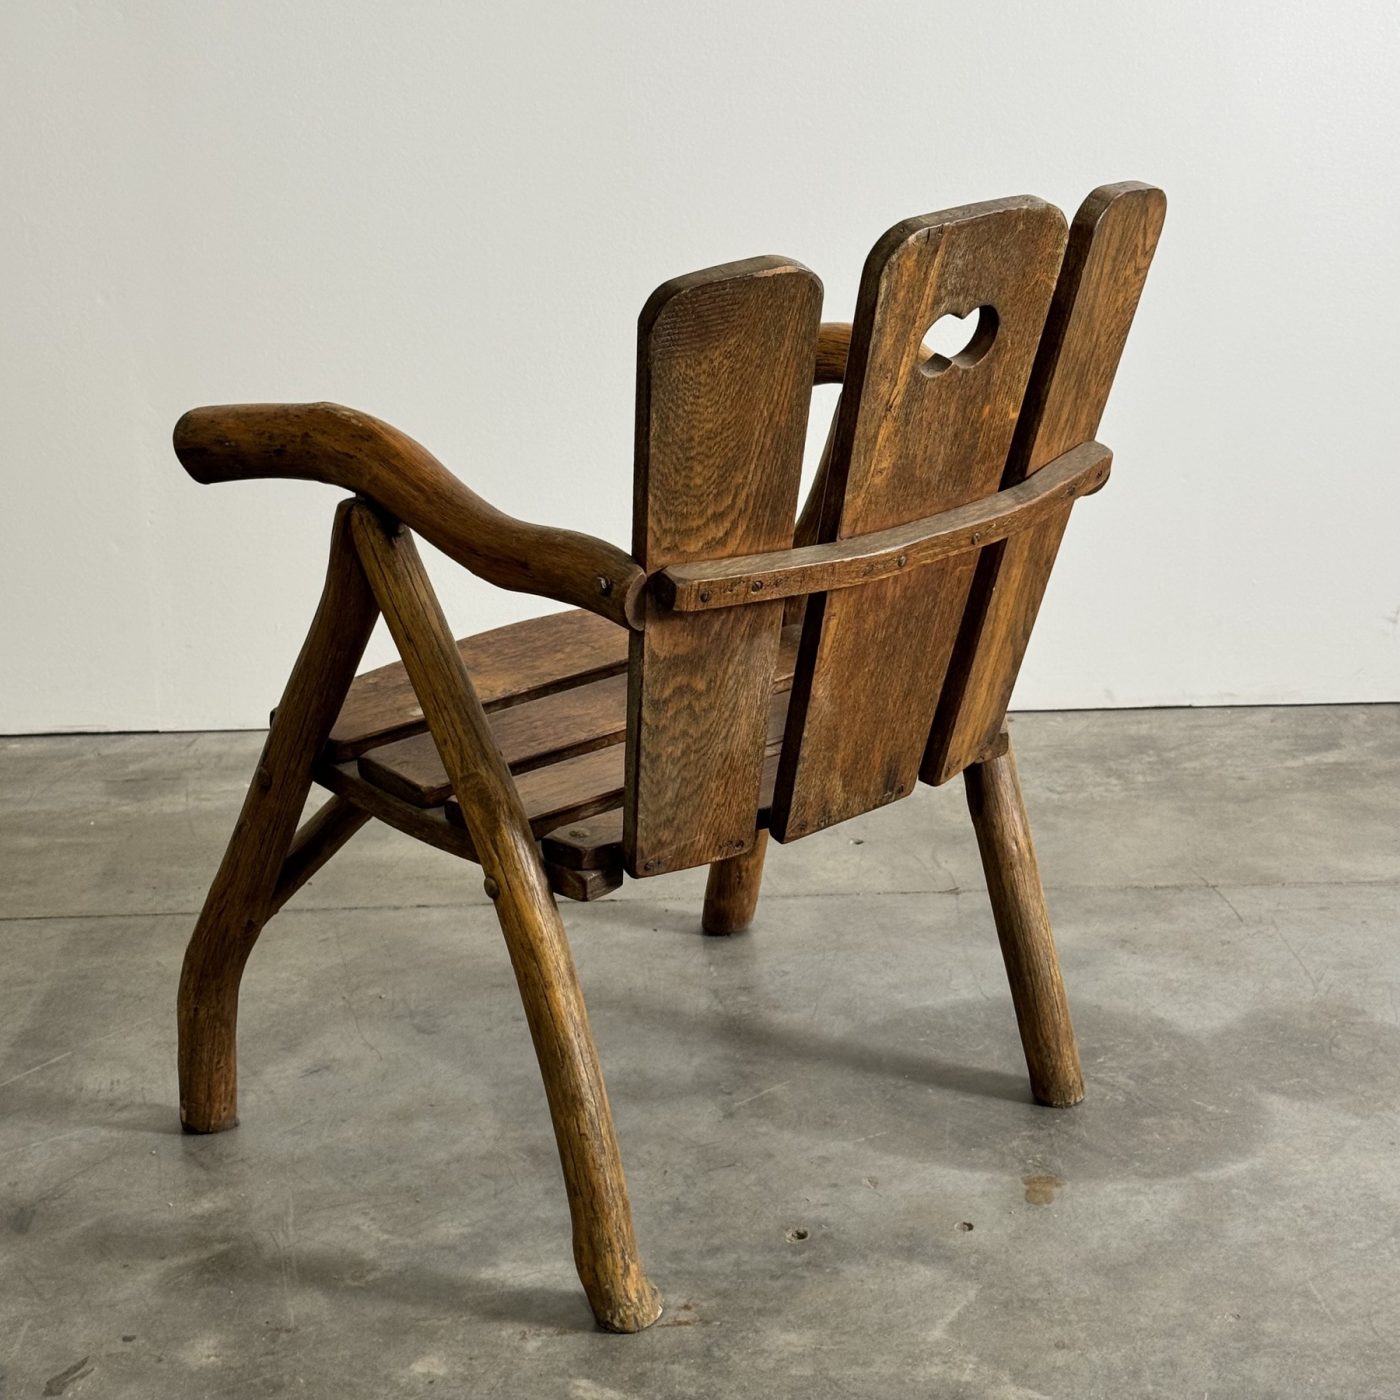 objet-vagabond-wooden-armchairs0002